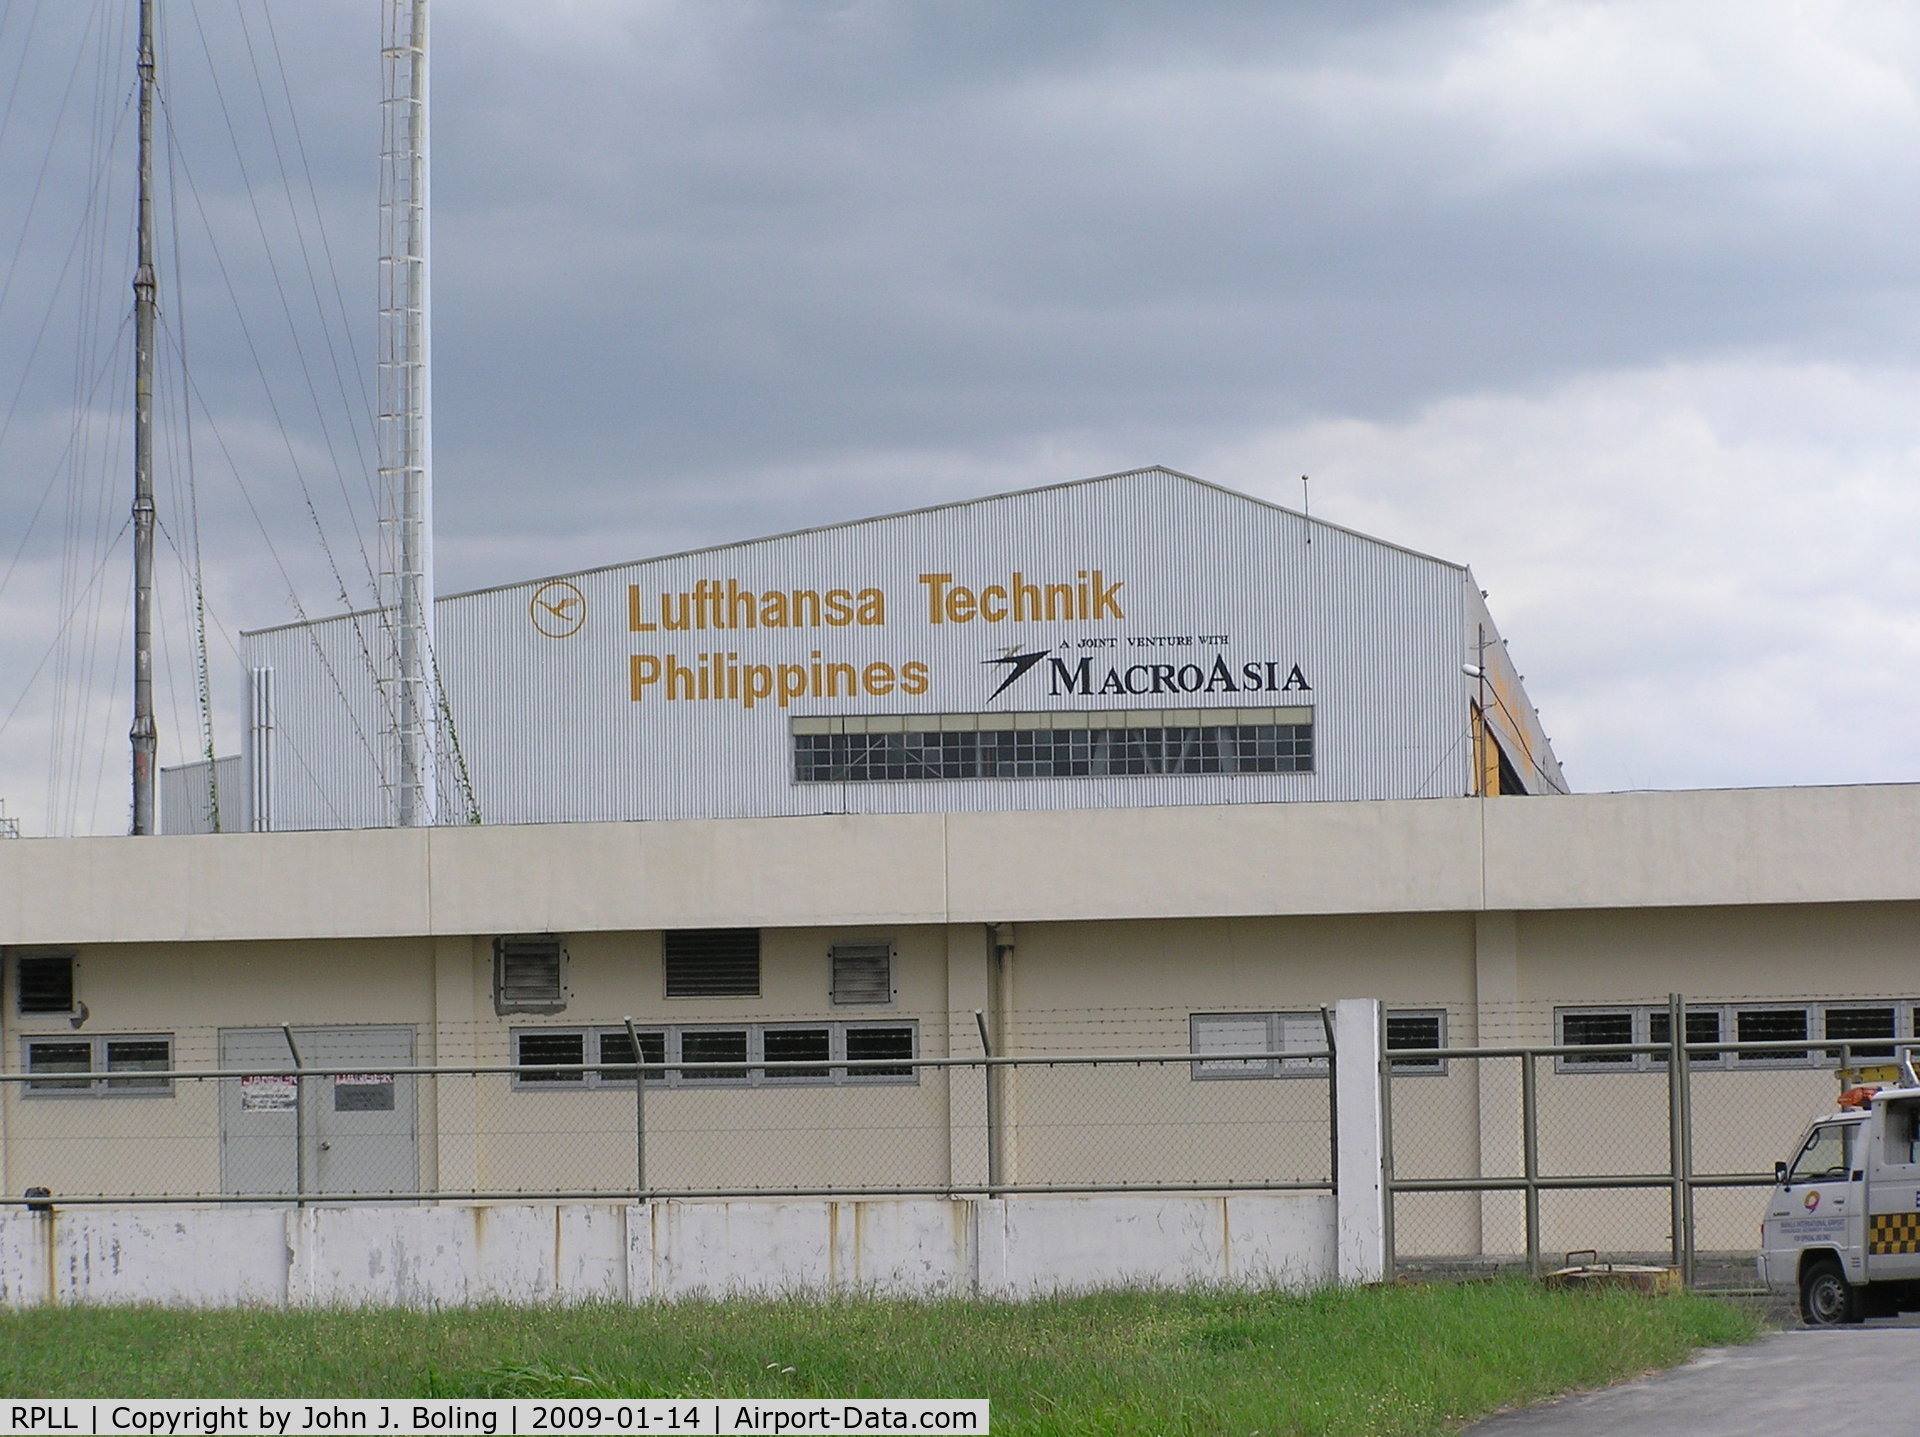 Ninoy Aquino International Airport, Manila Philippines (RPLL) - MRO facility at Manila